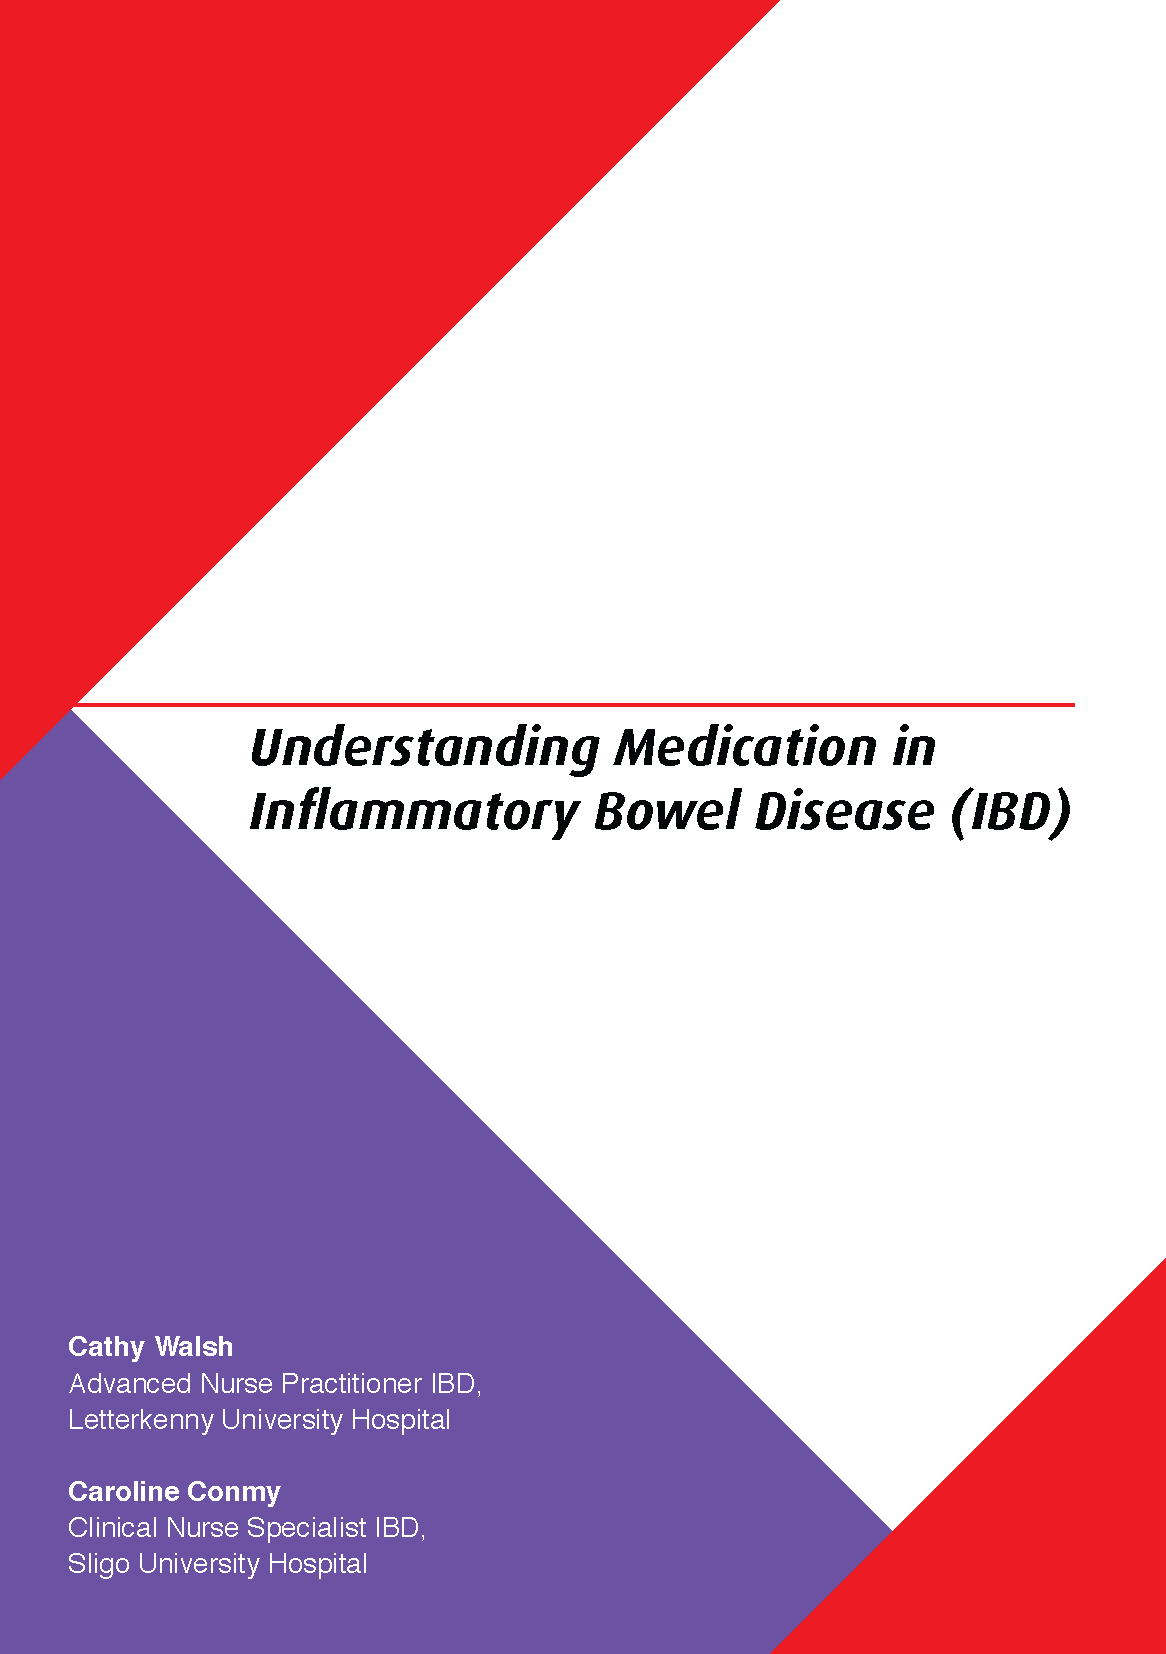 Understanding Medication in IBD